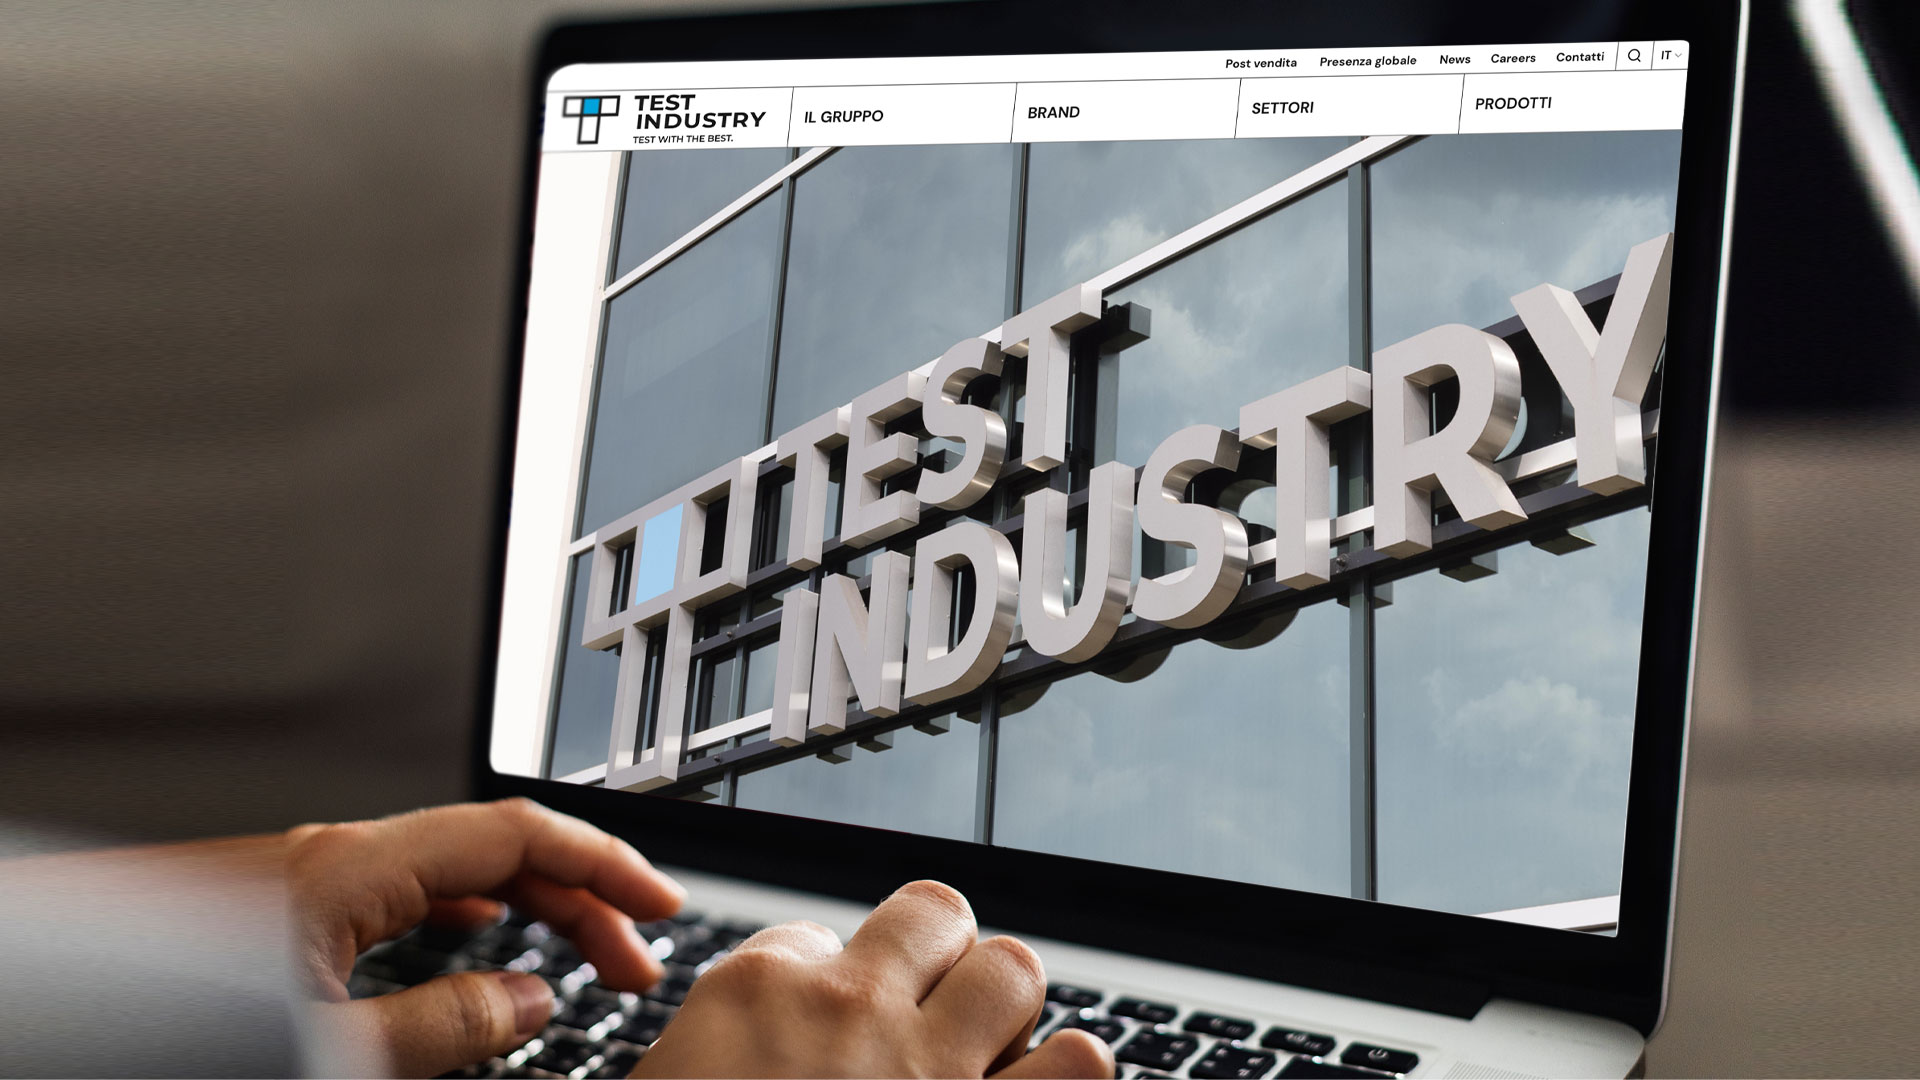 New Test Industry website is online